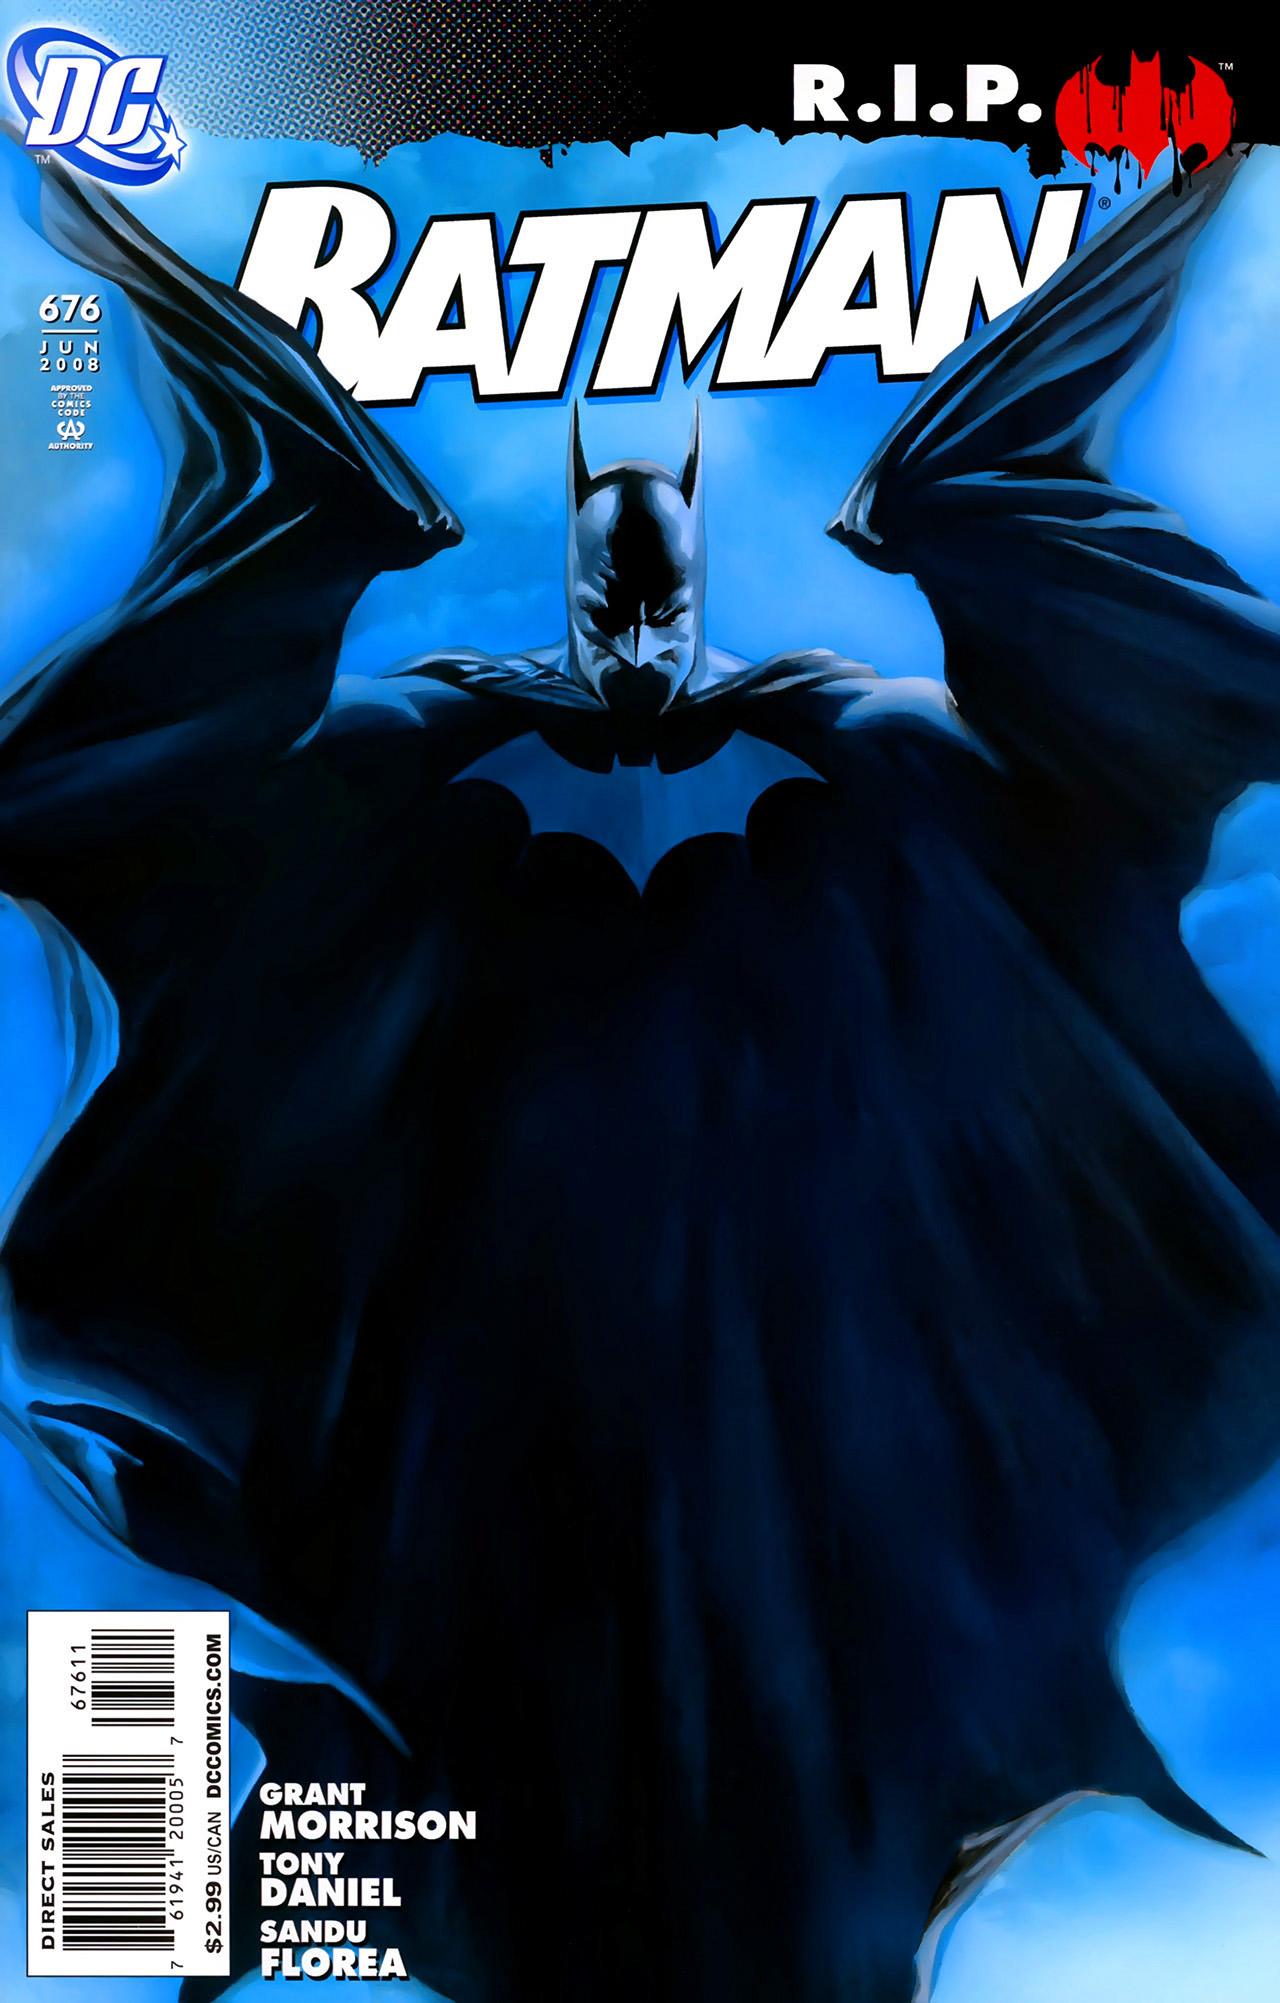 [RANKING QUADRINHOS] - Guerra Civil 2 (encerrado) - Página 14 Batman-676